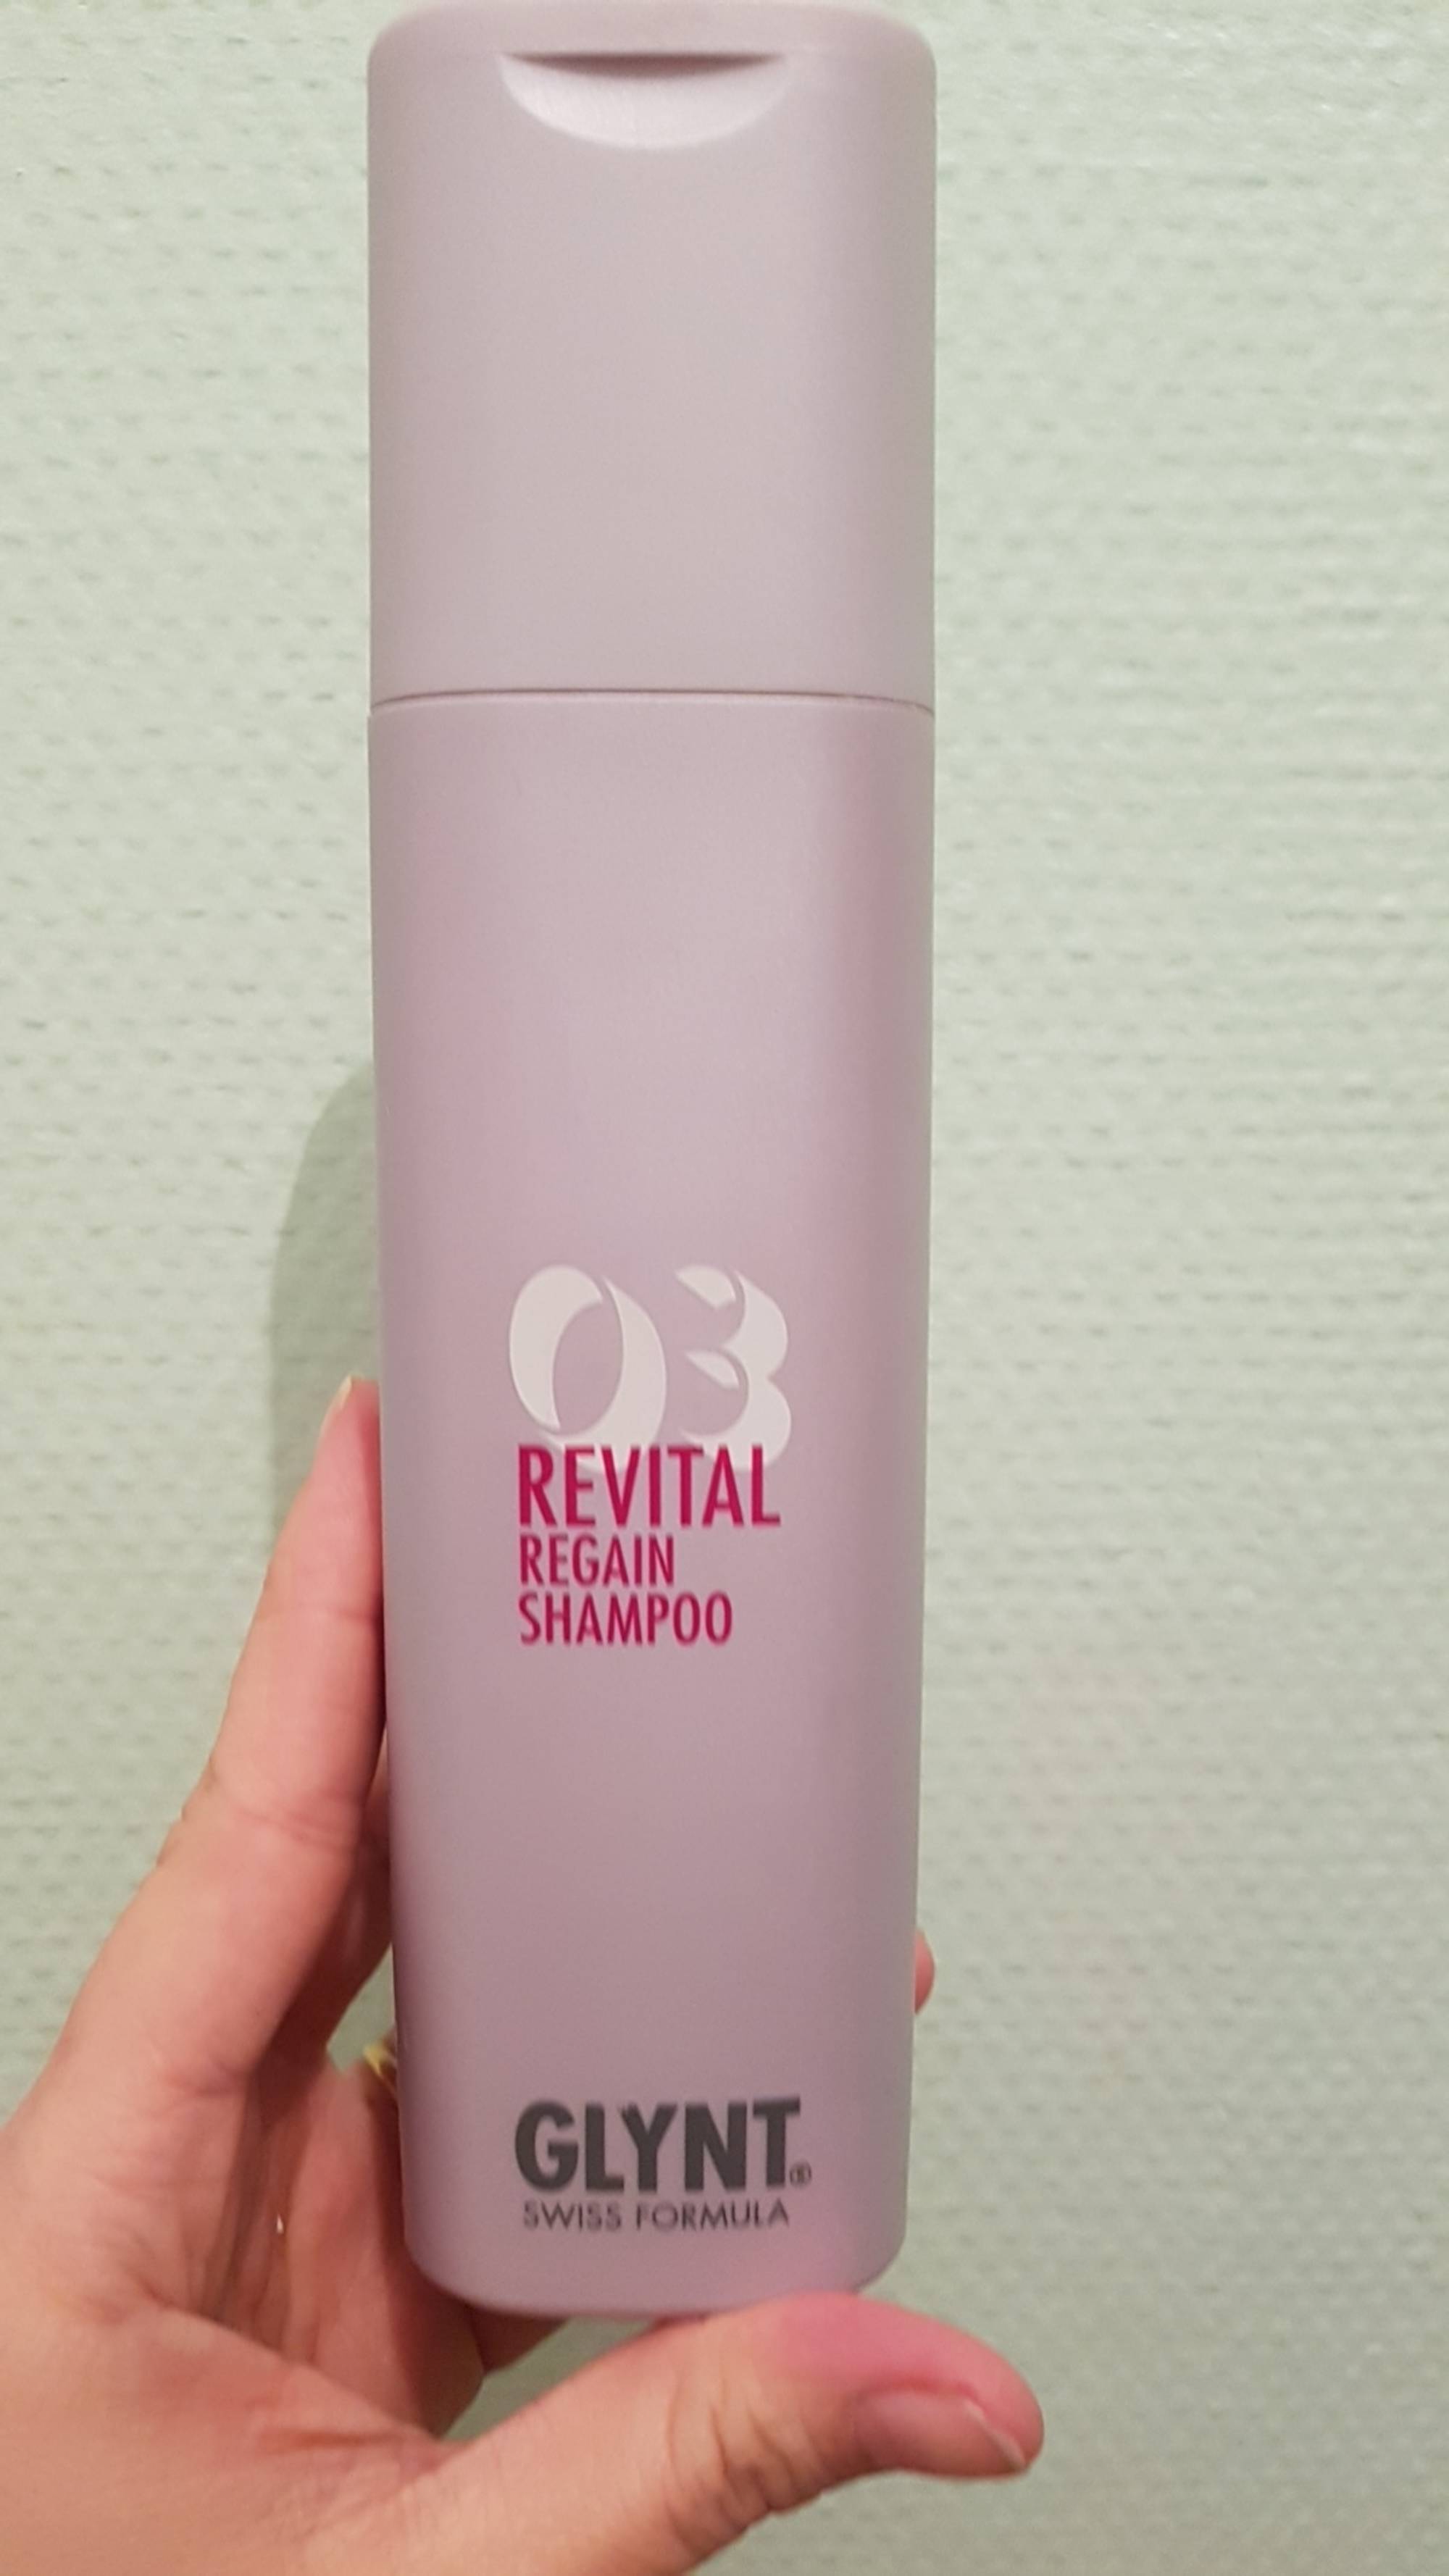 GLYNT - 03 Revital regain shampoo